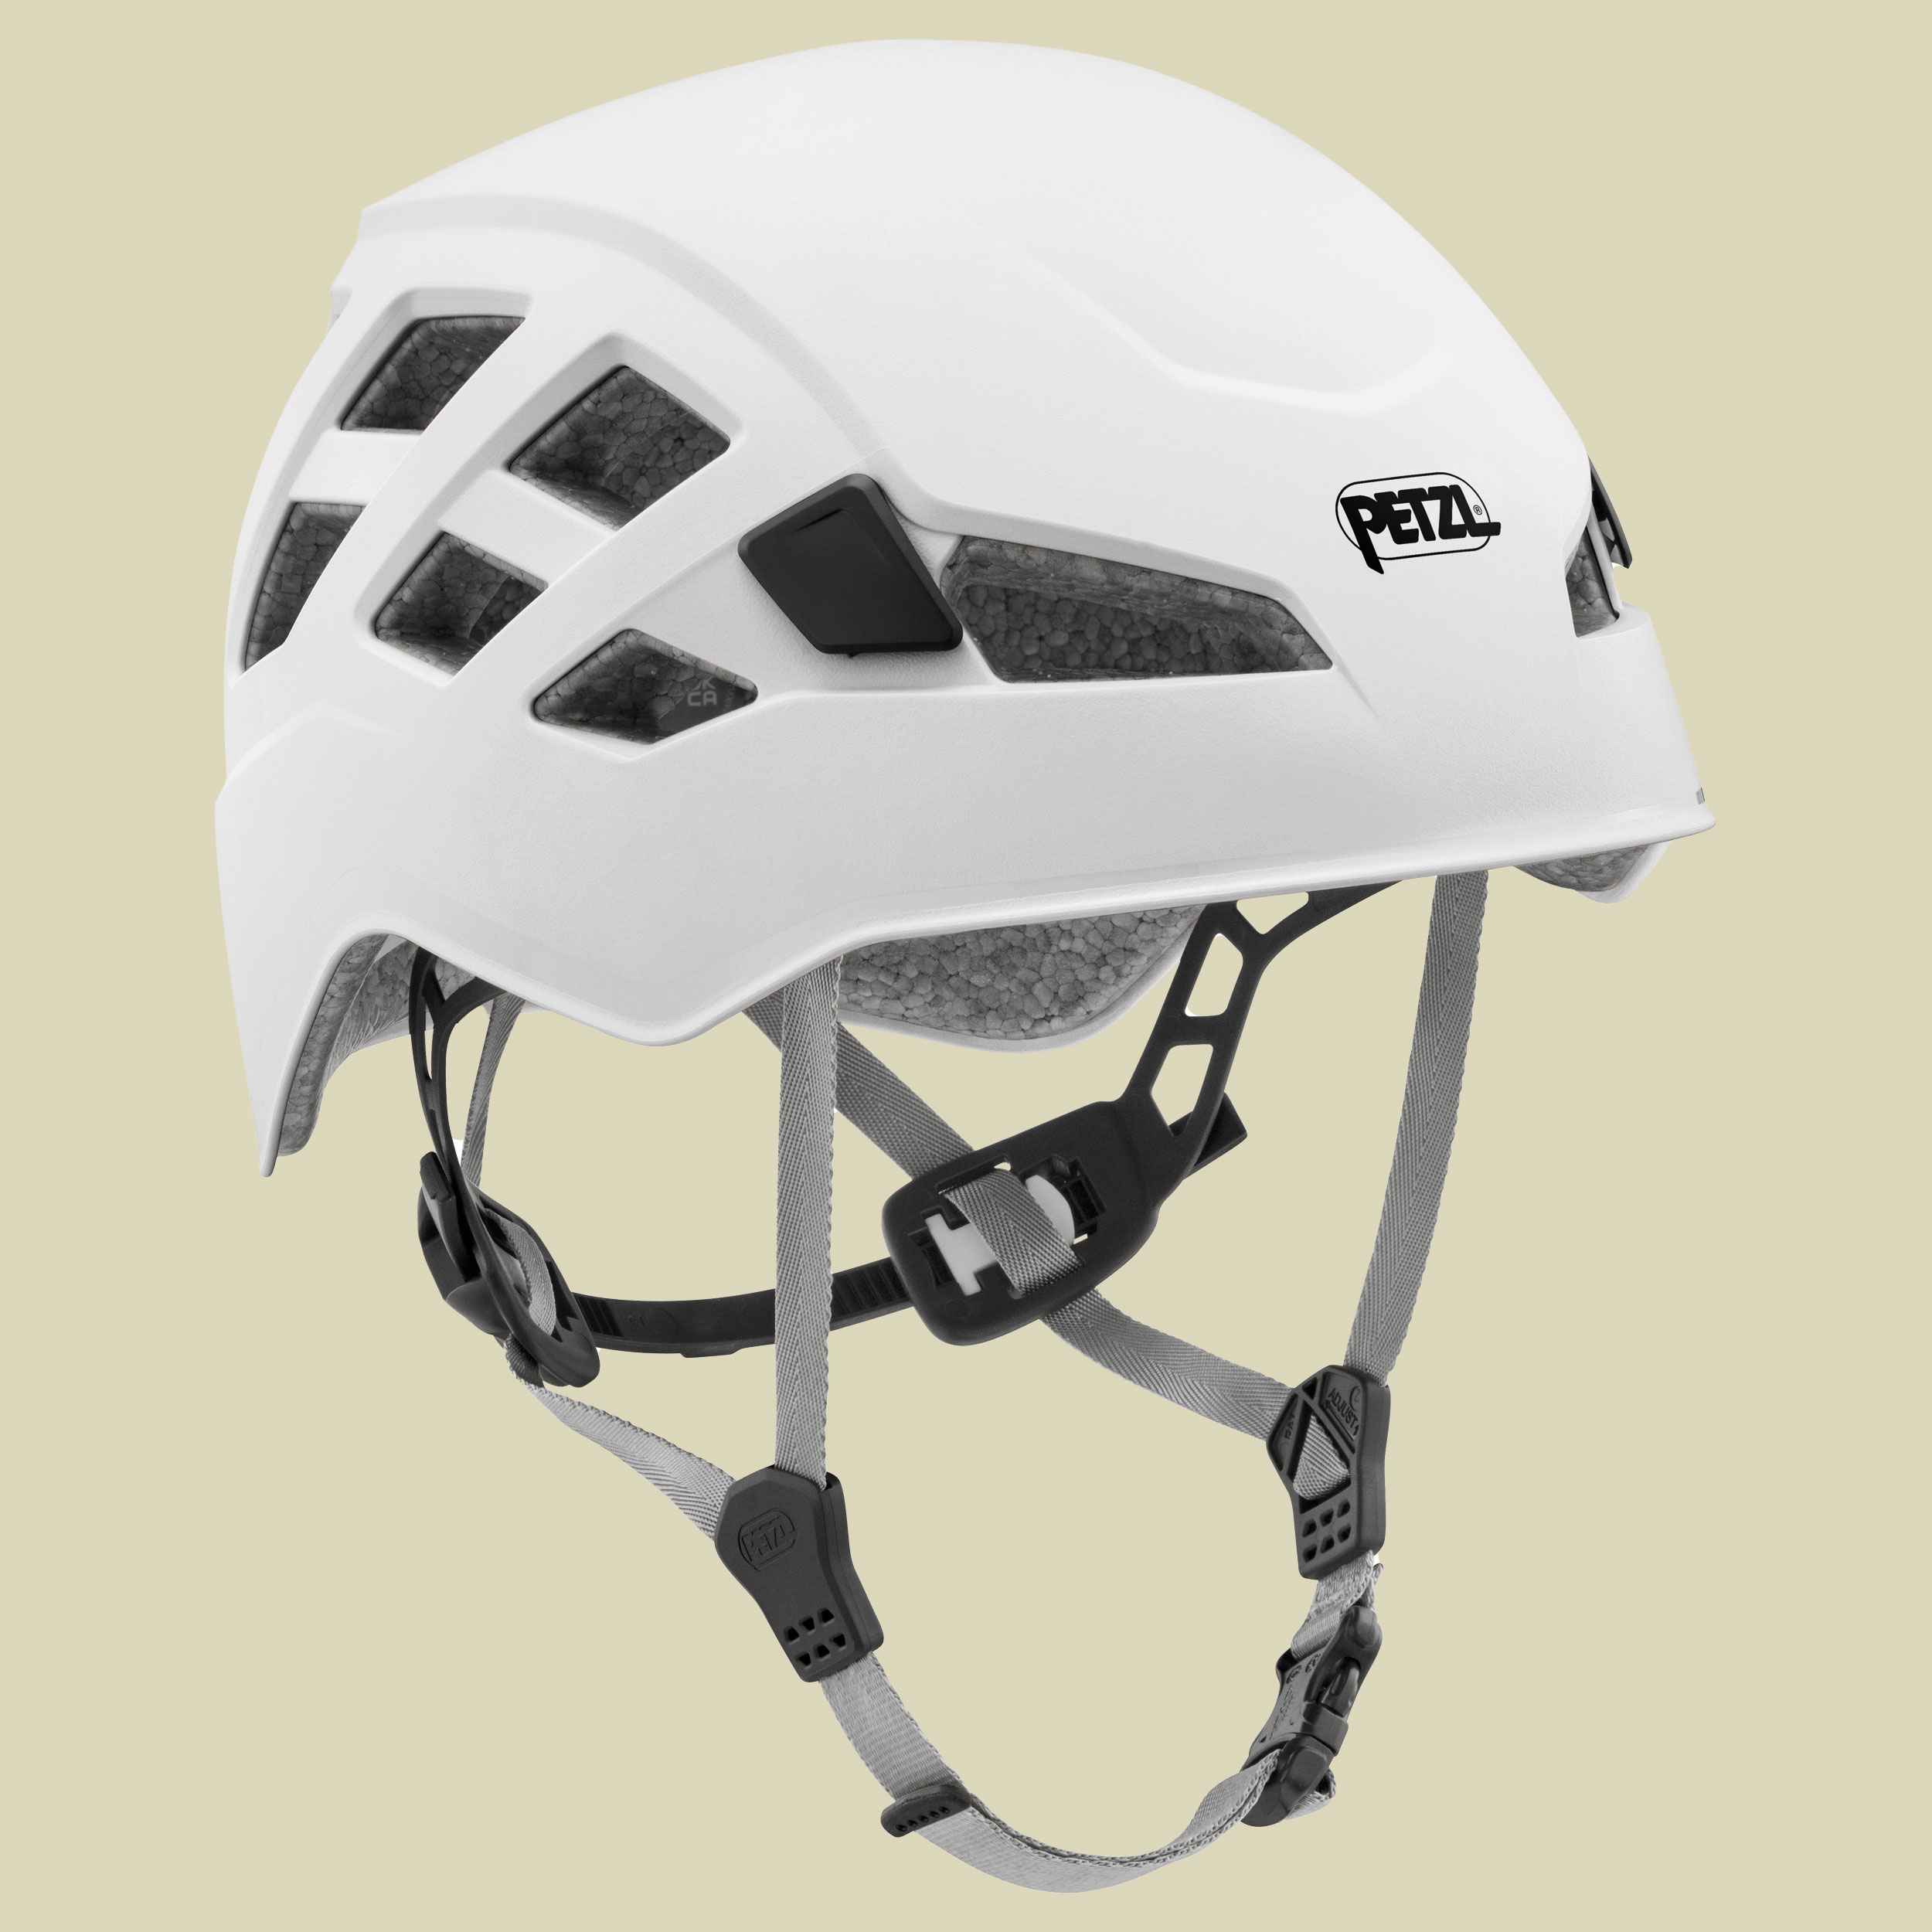 Boreo Helm Größe M/L Farbe weiß